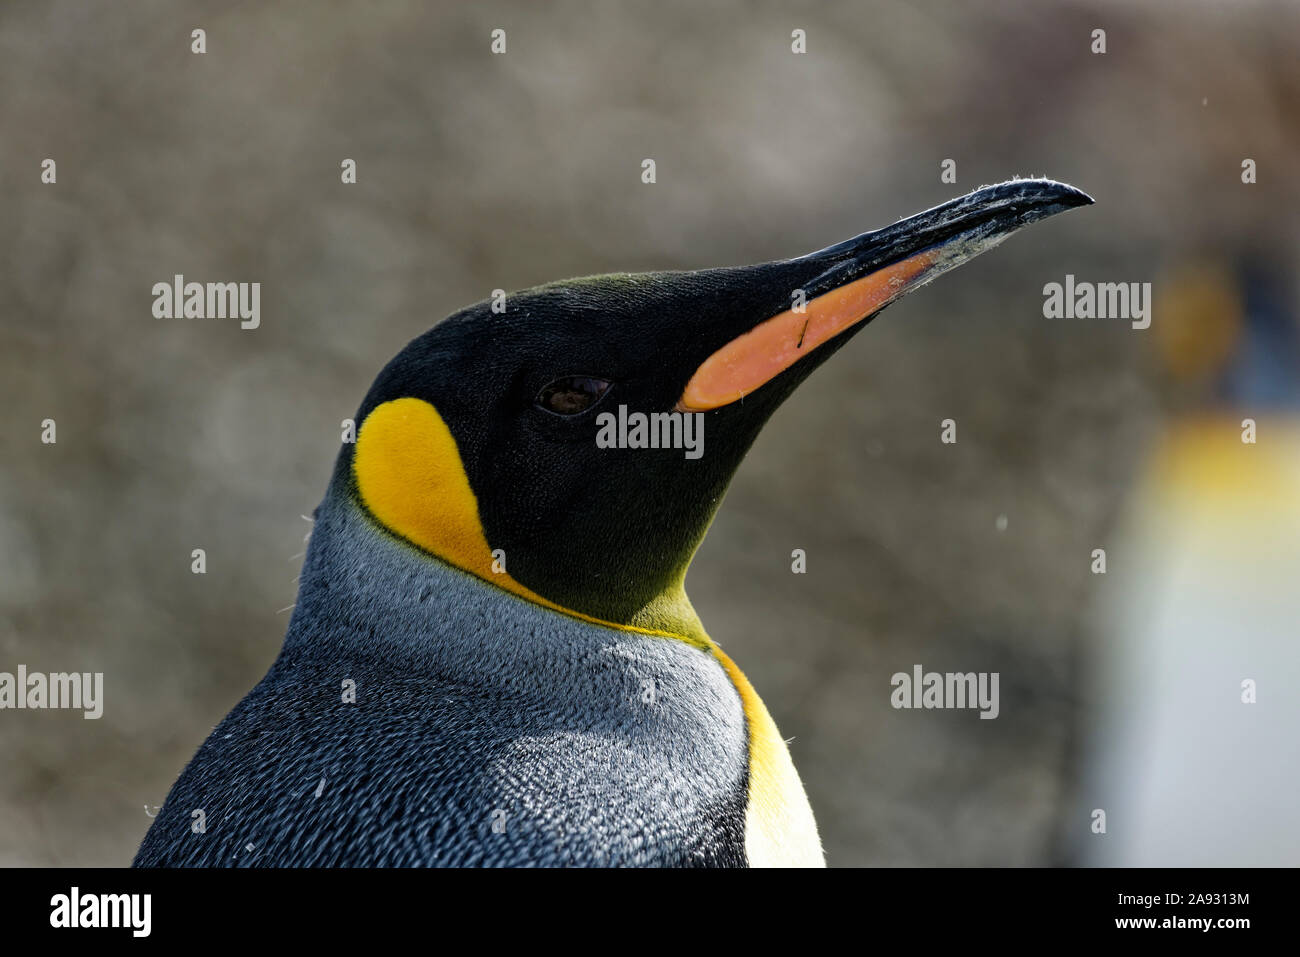 King penguin (Aptenodytes patagonicus), close up portrait, St. Andrews Bay, South Georgia Stock Photo